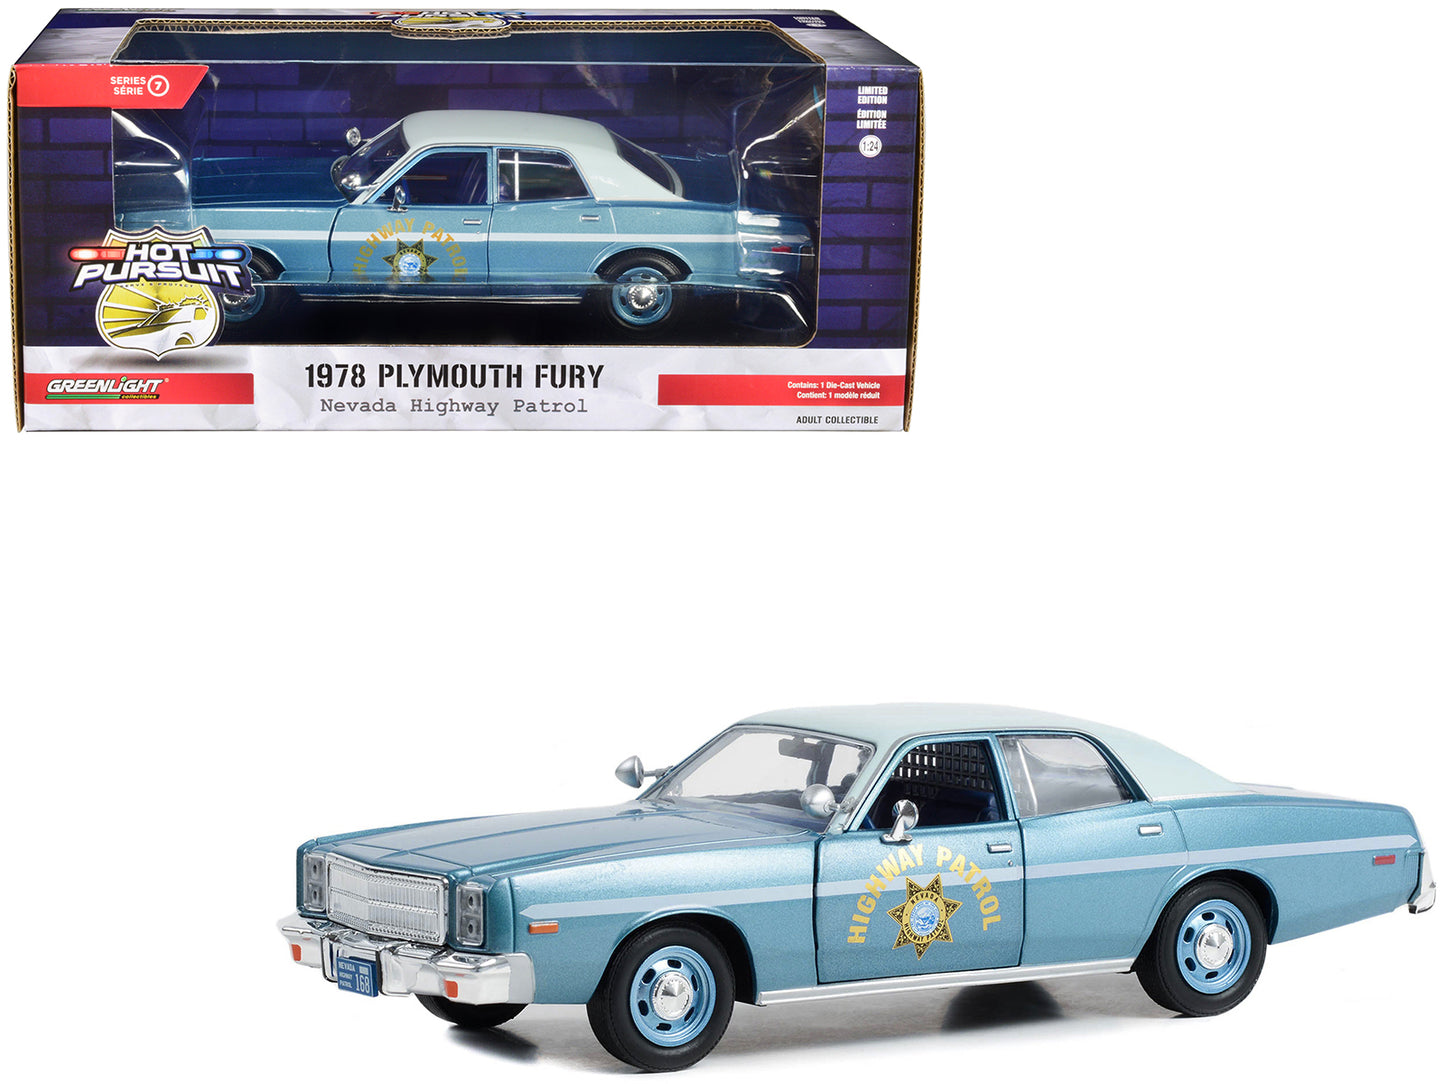 1978 Plymouth Fury Slicktop Blue Diecast Model Car 